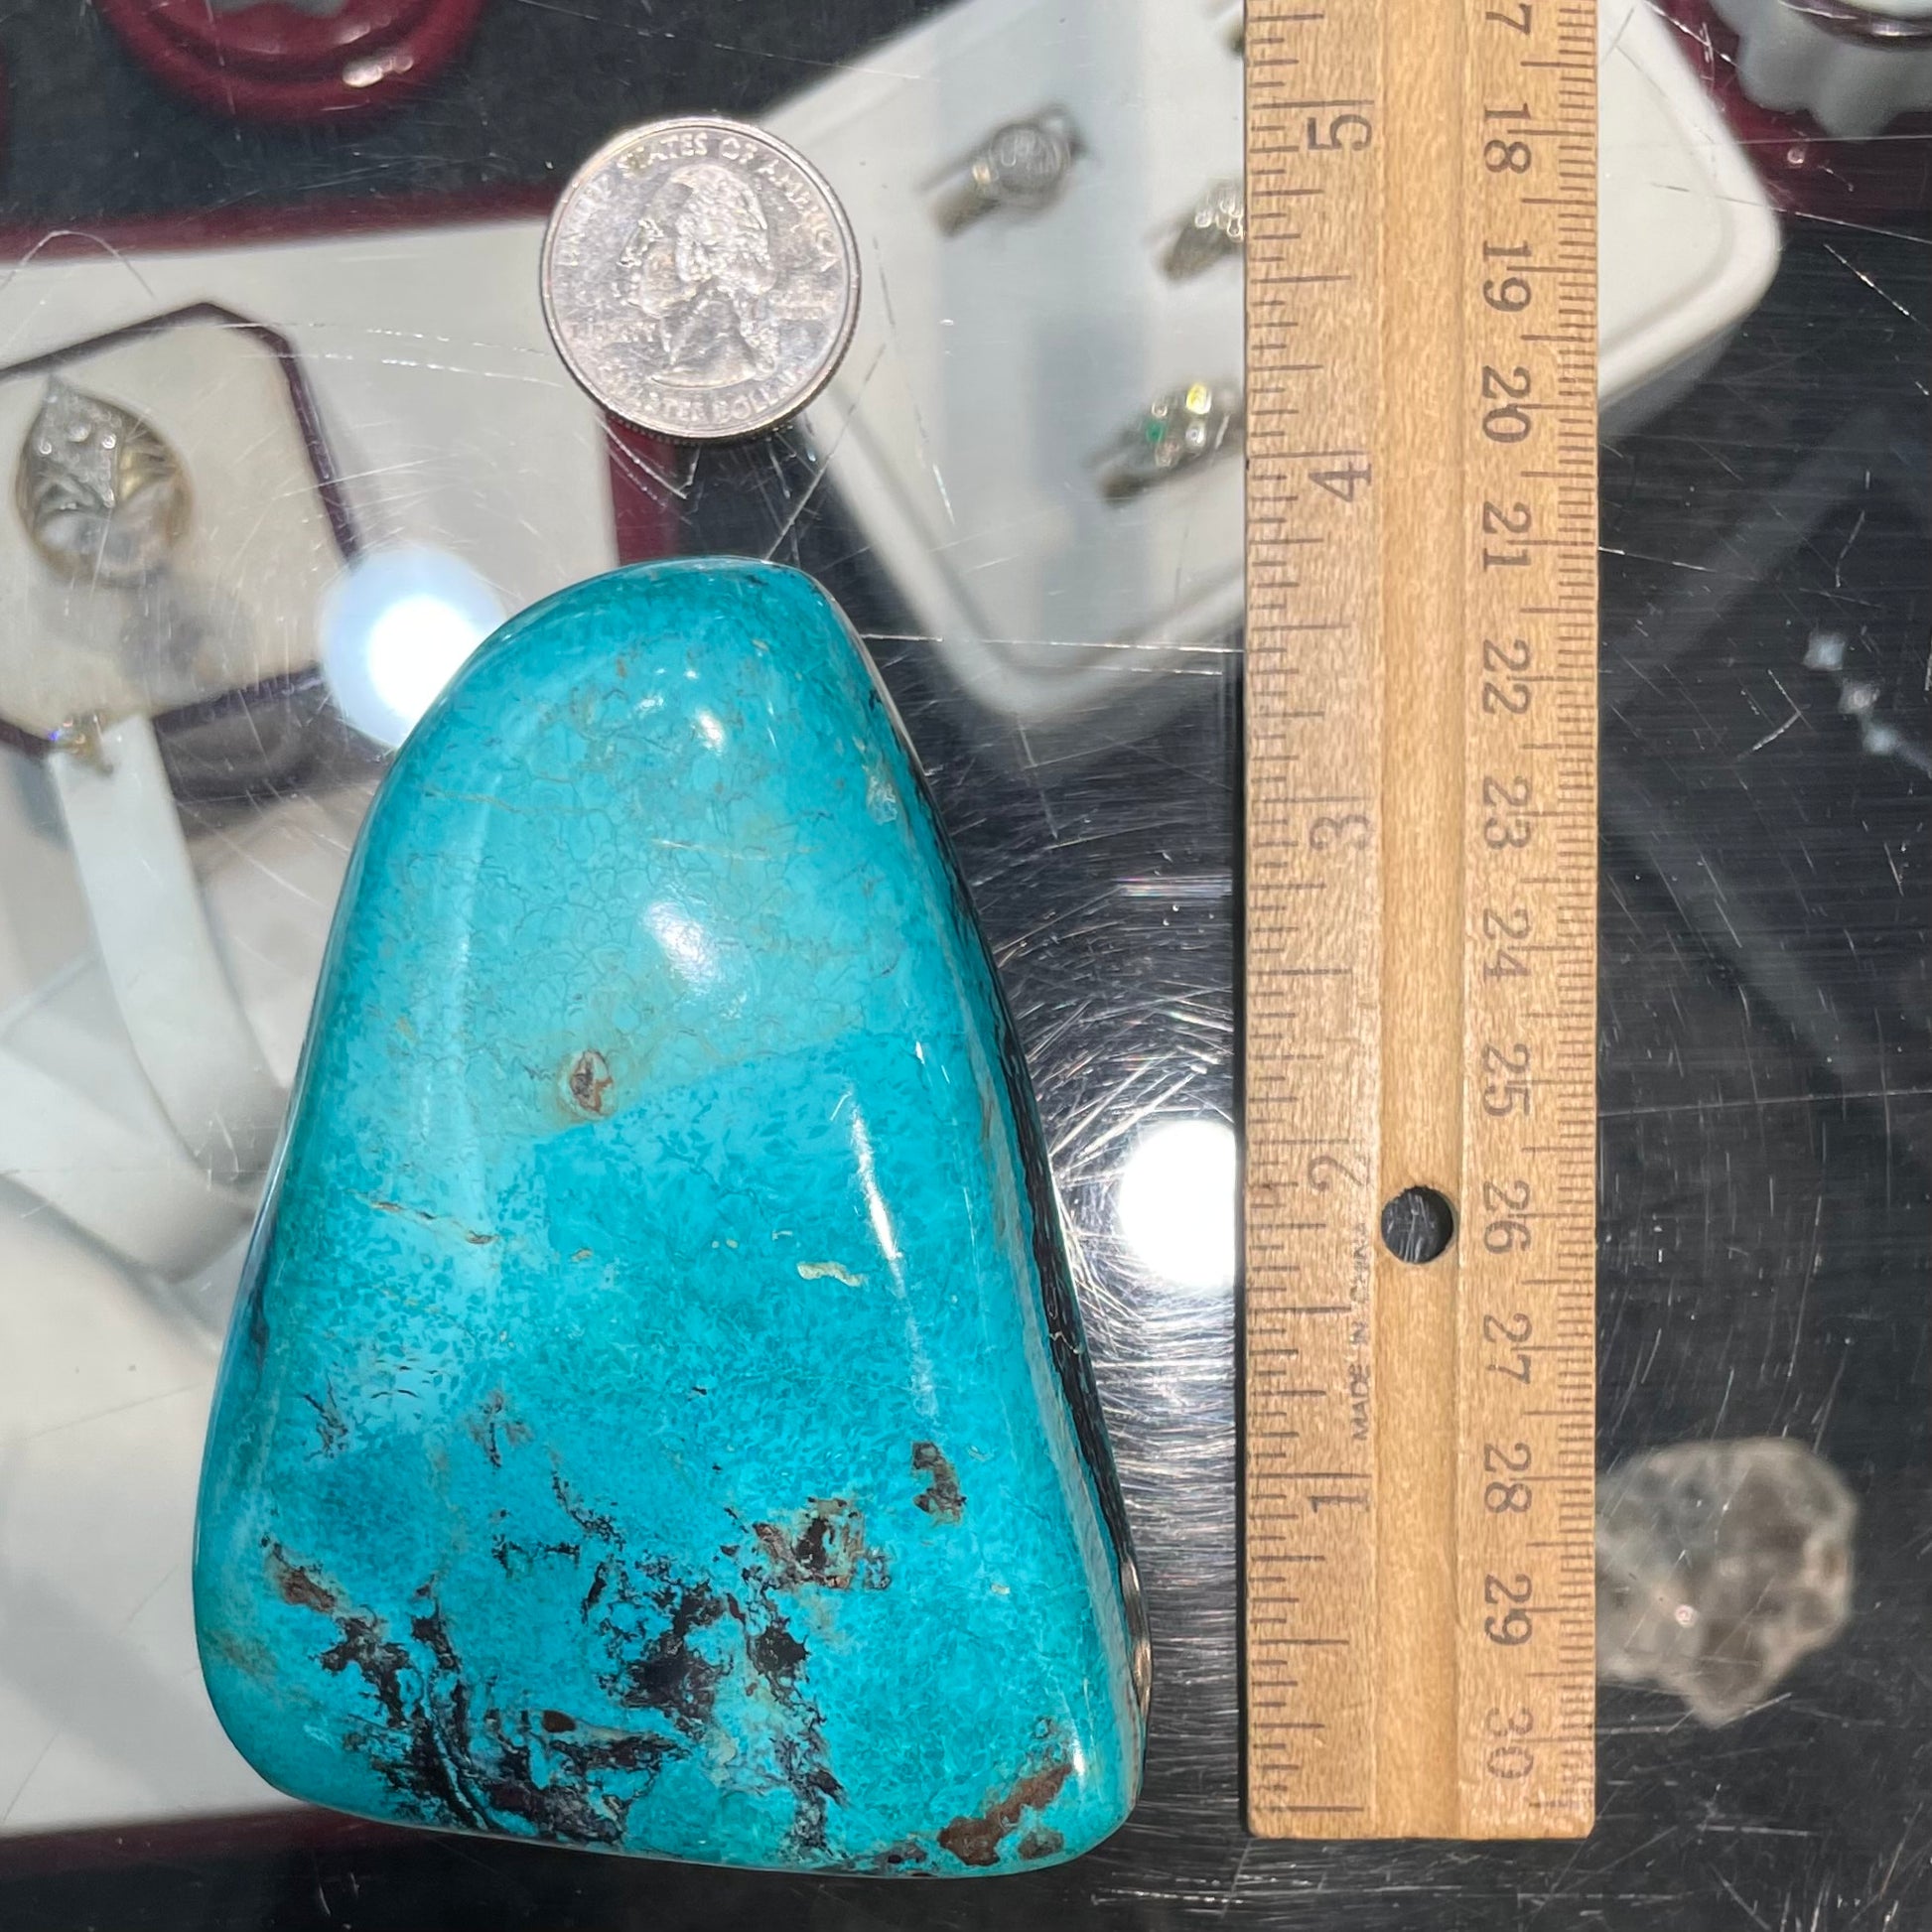 An exceptionally large, freeform shaped, polished turquoise specimen from Morenci, Arizona.